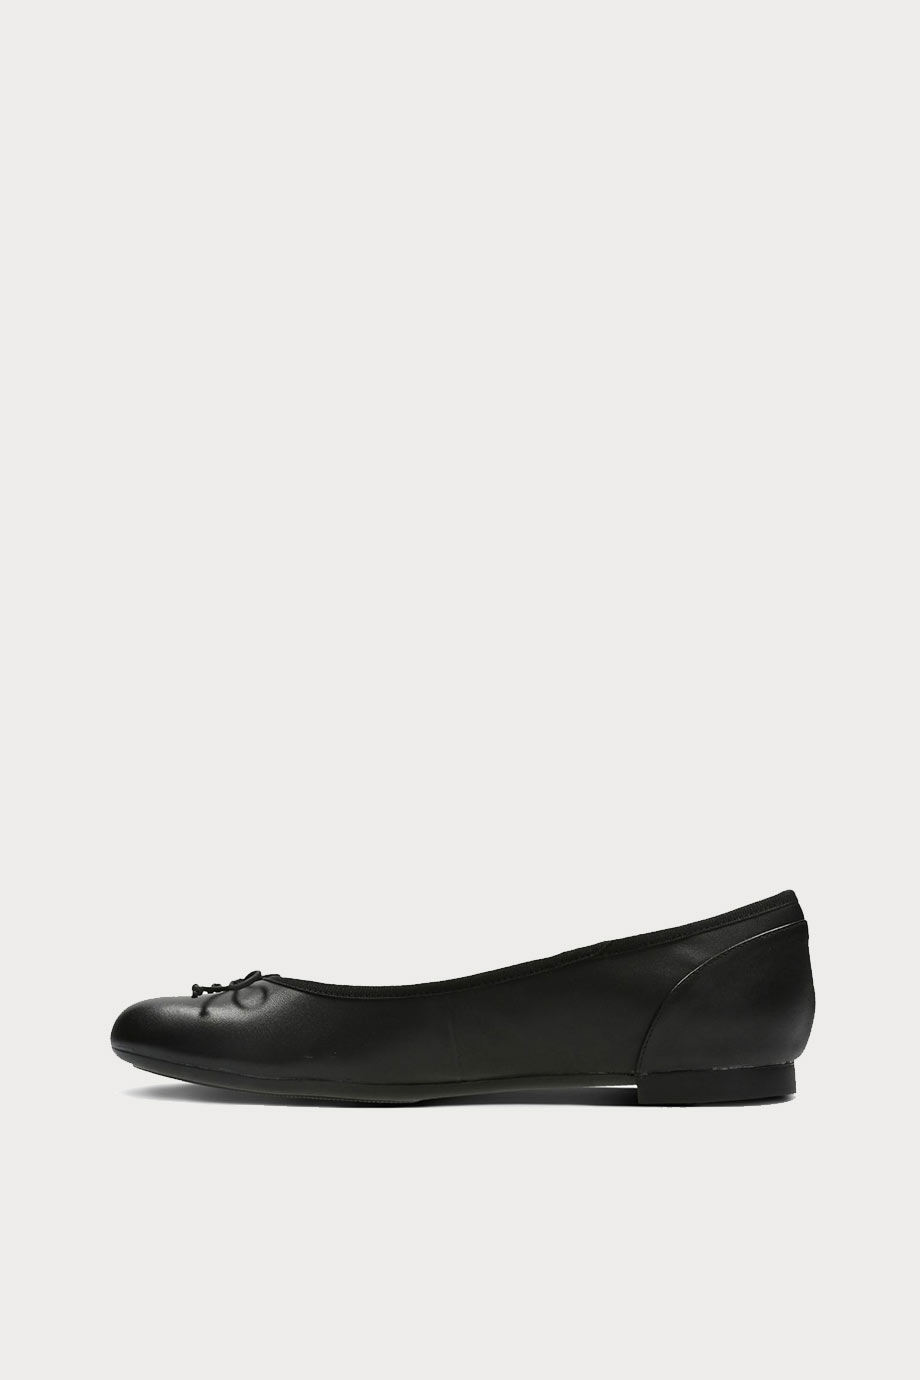 spiridoula metheniti shoes xalkida p Couture Bloom clarks black leather 5